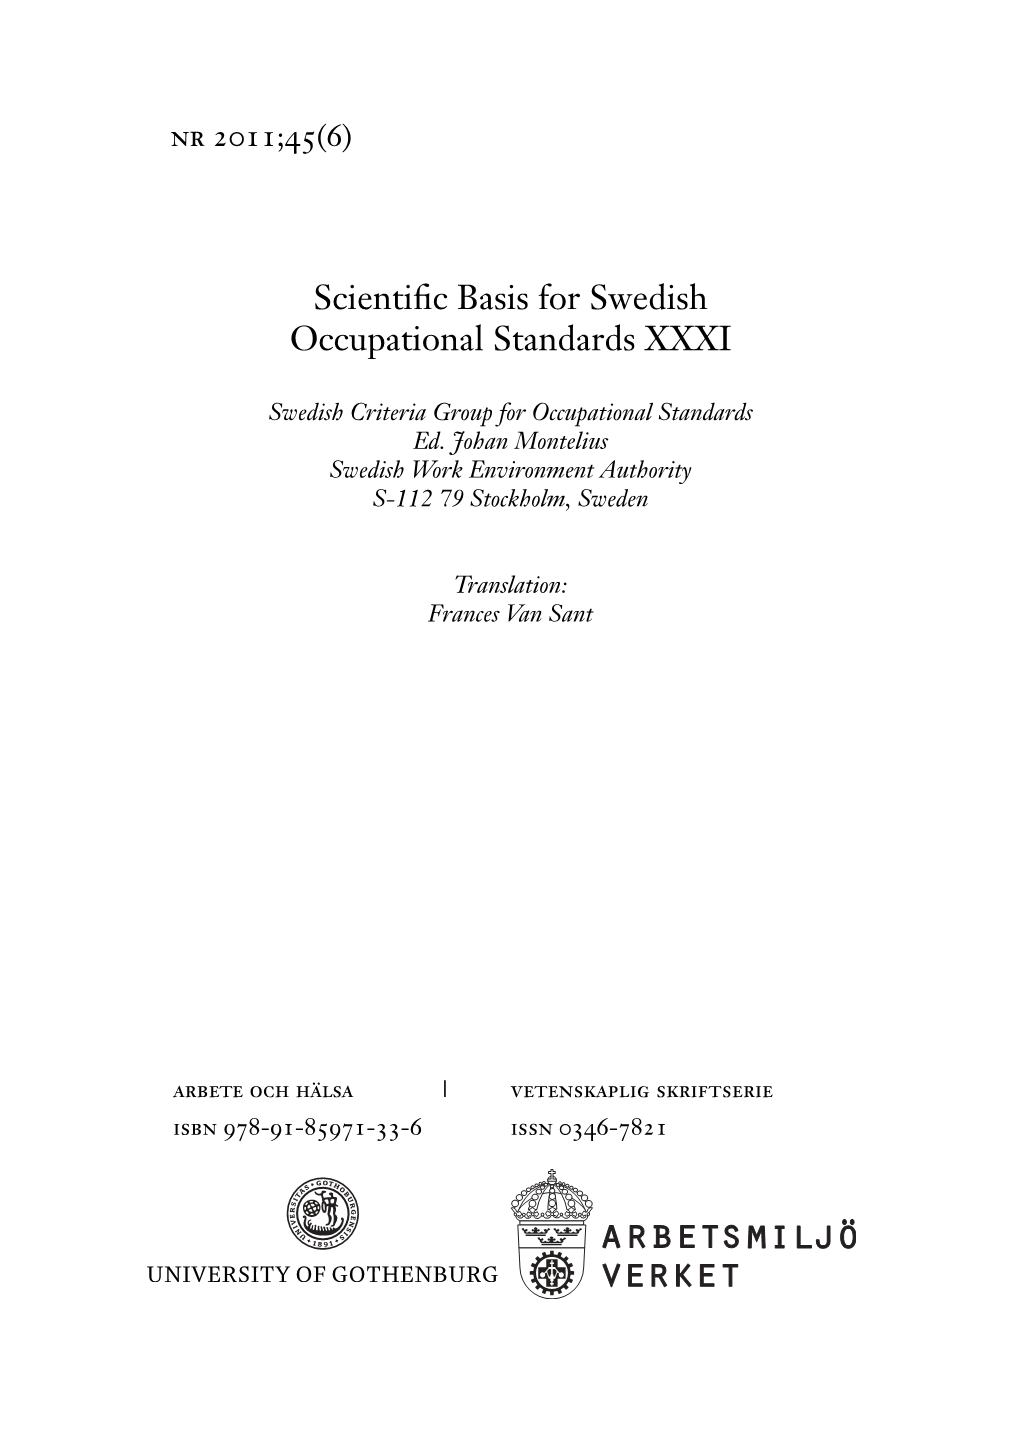 Scientific Basis for Swedish Occupational Standards XXXI